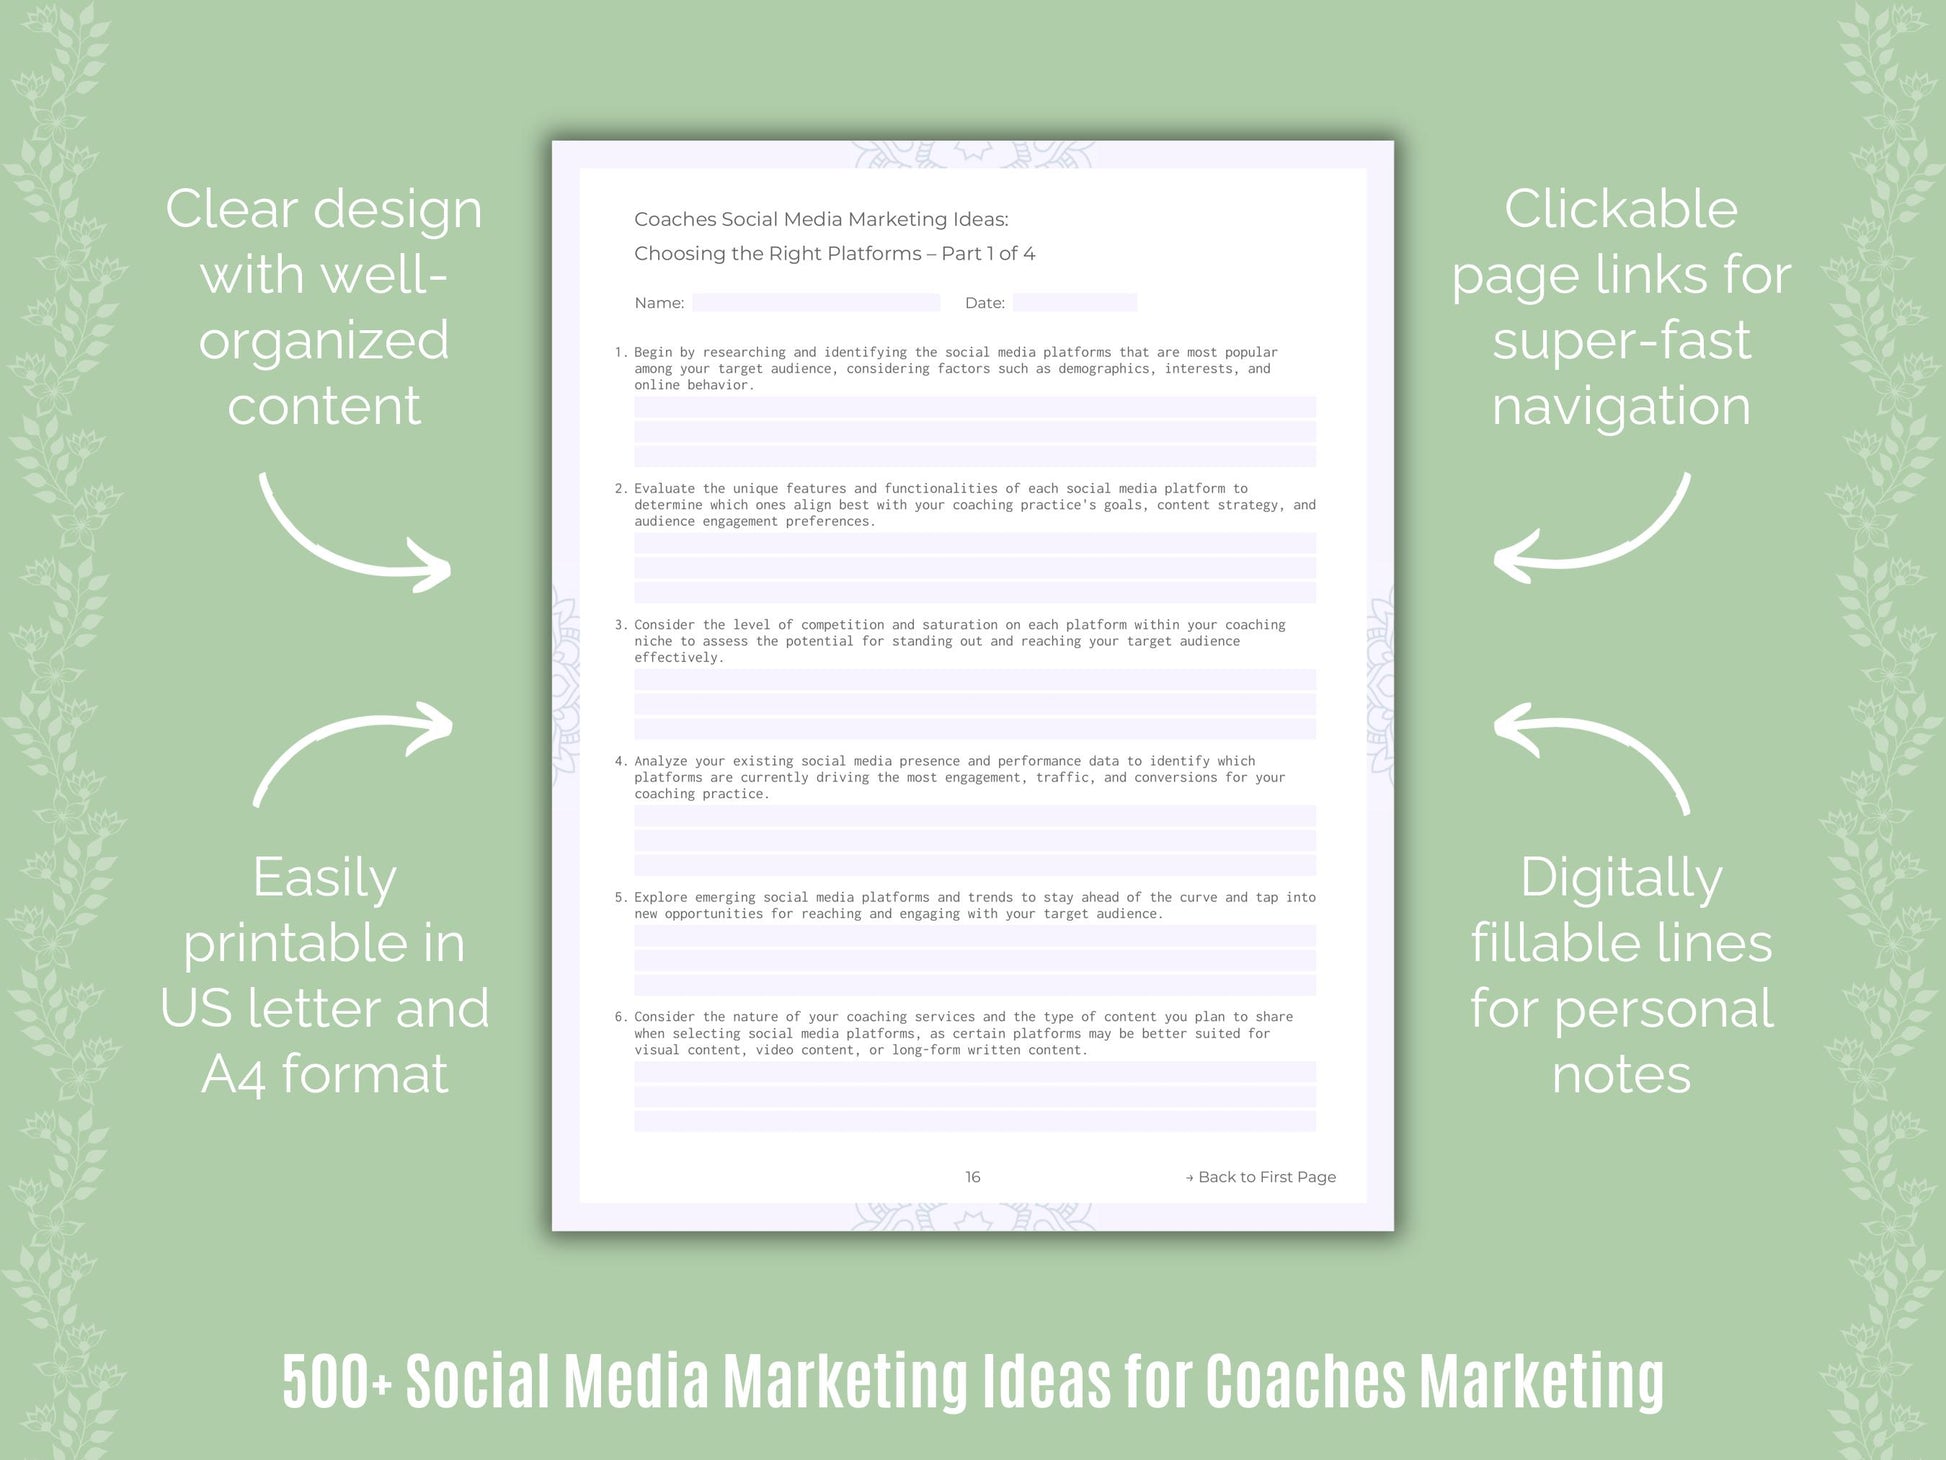 Coaches Social Media Marketing Ideas Resource